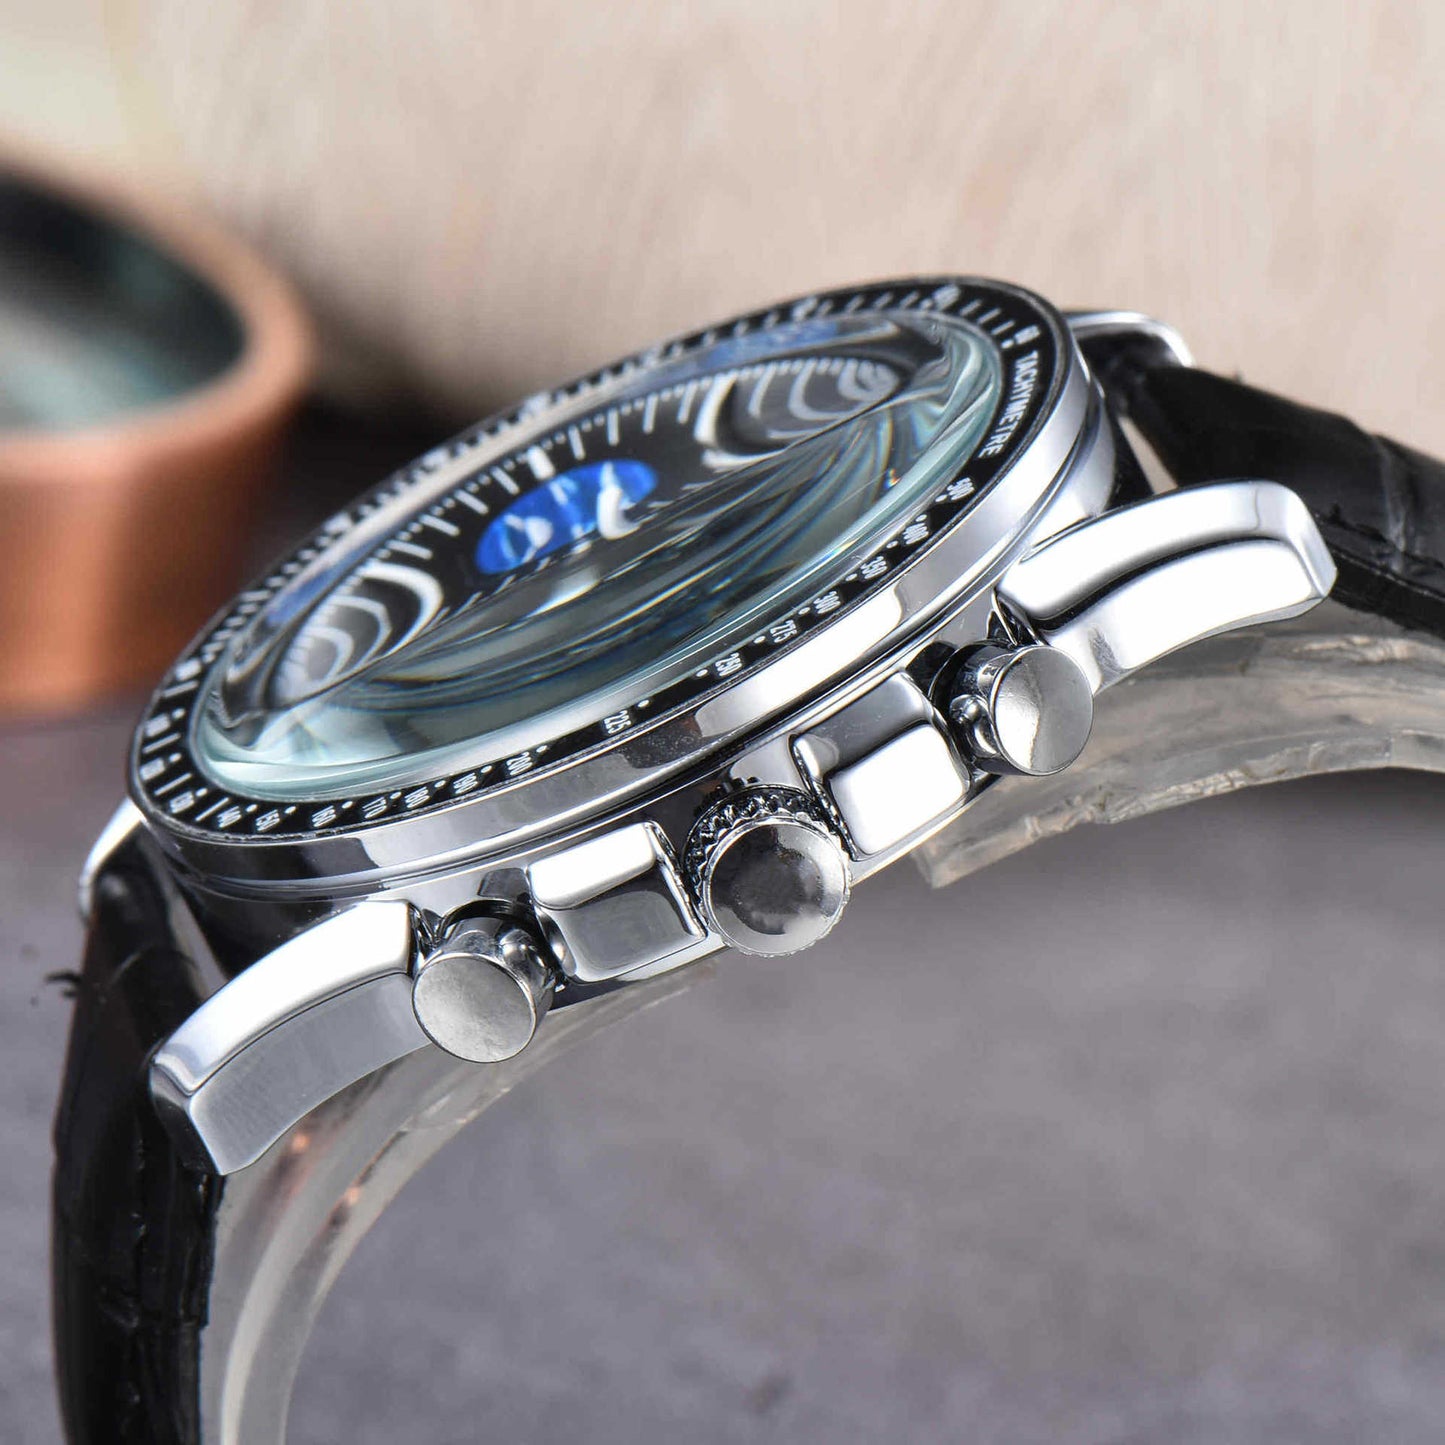 Steel Band Six-pin Quartz Chronograph Watch